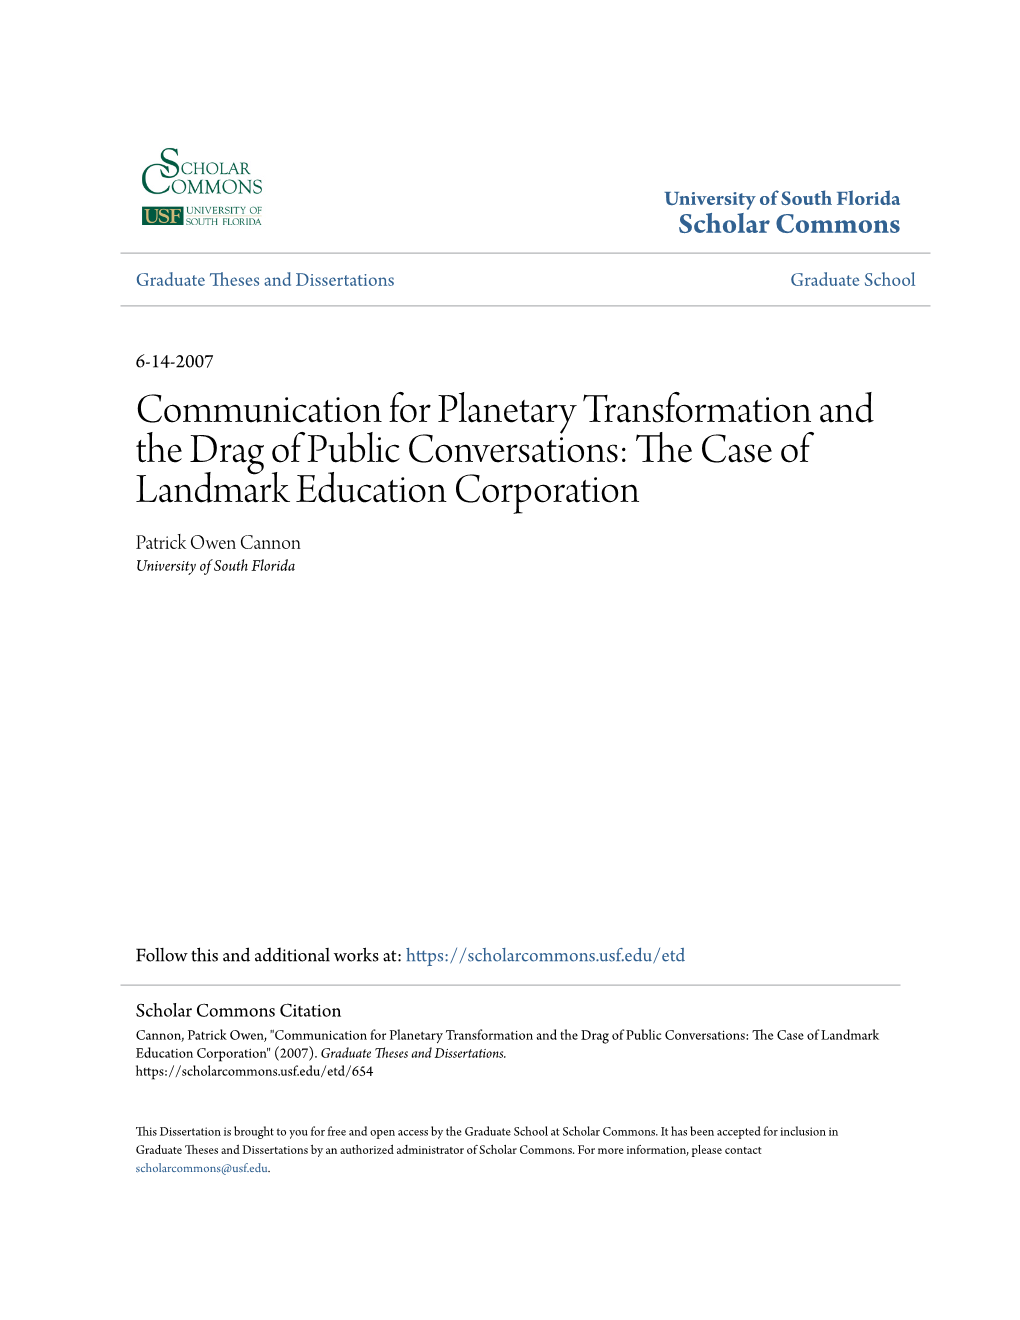 The Case of Landmark Education Corporation